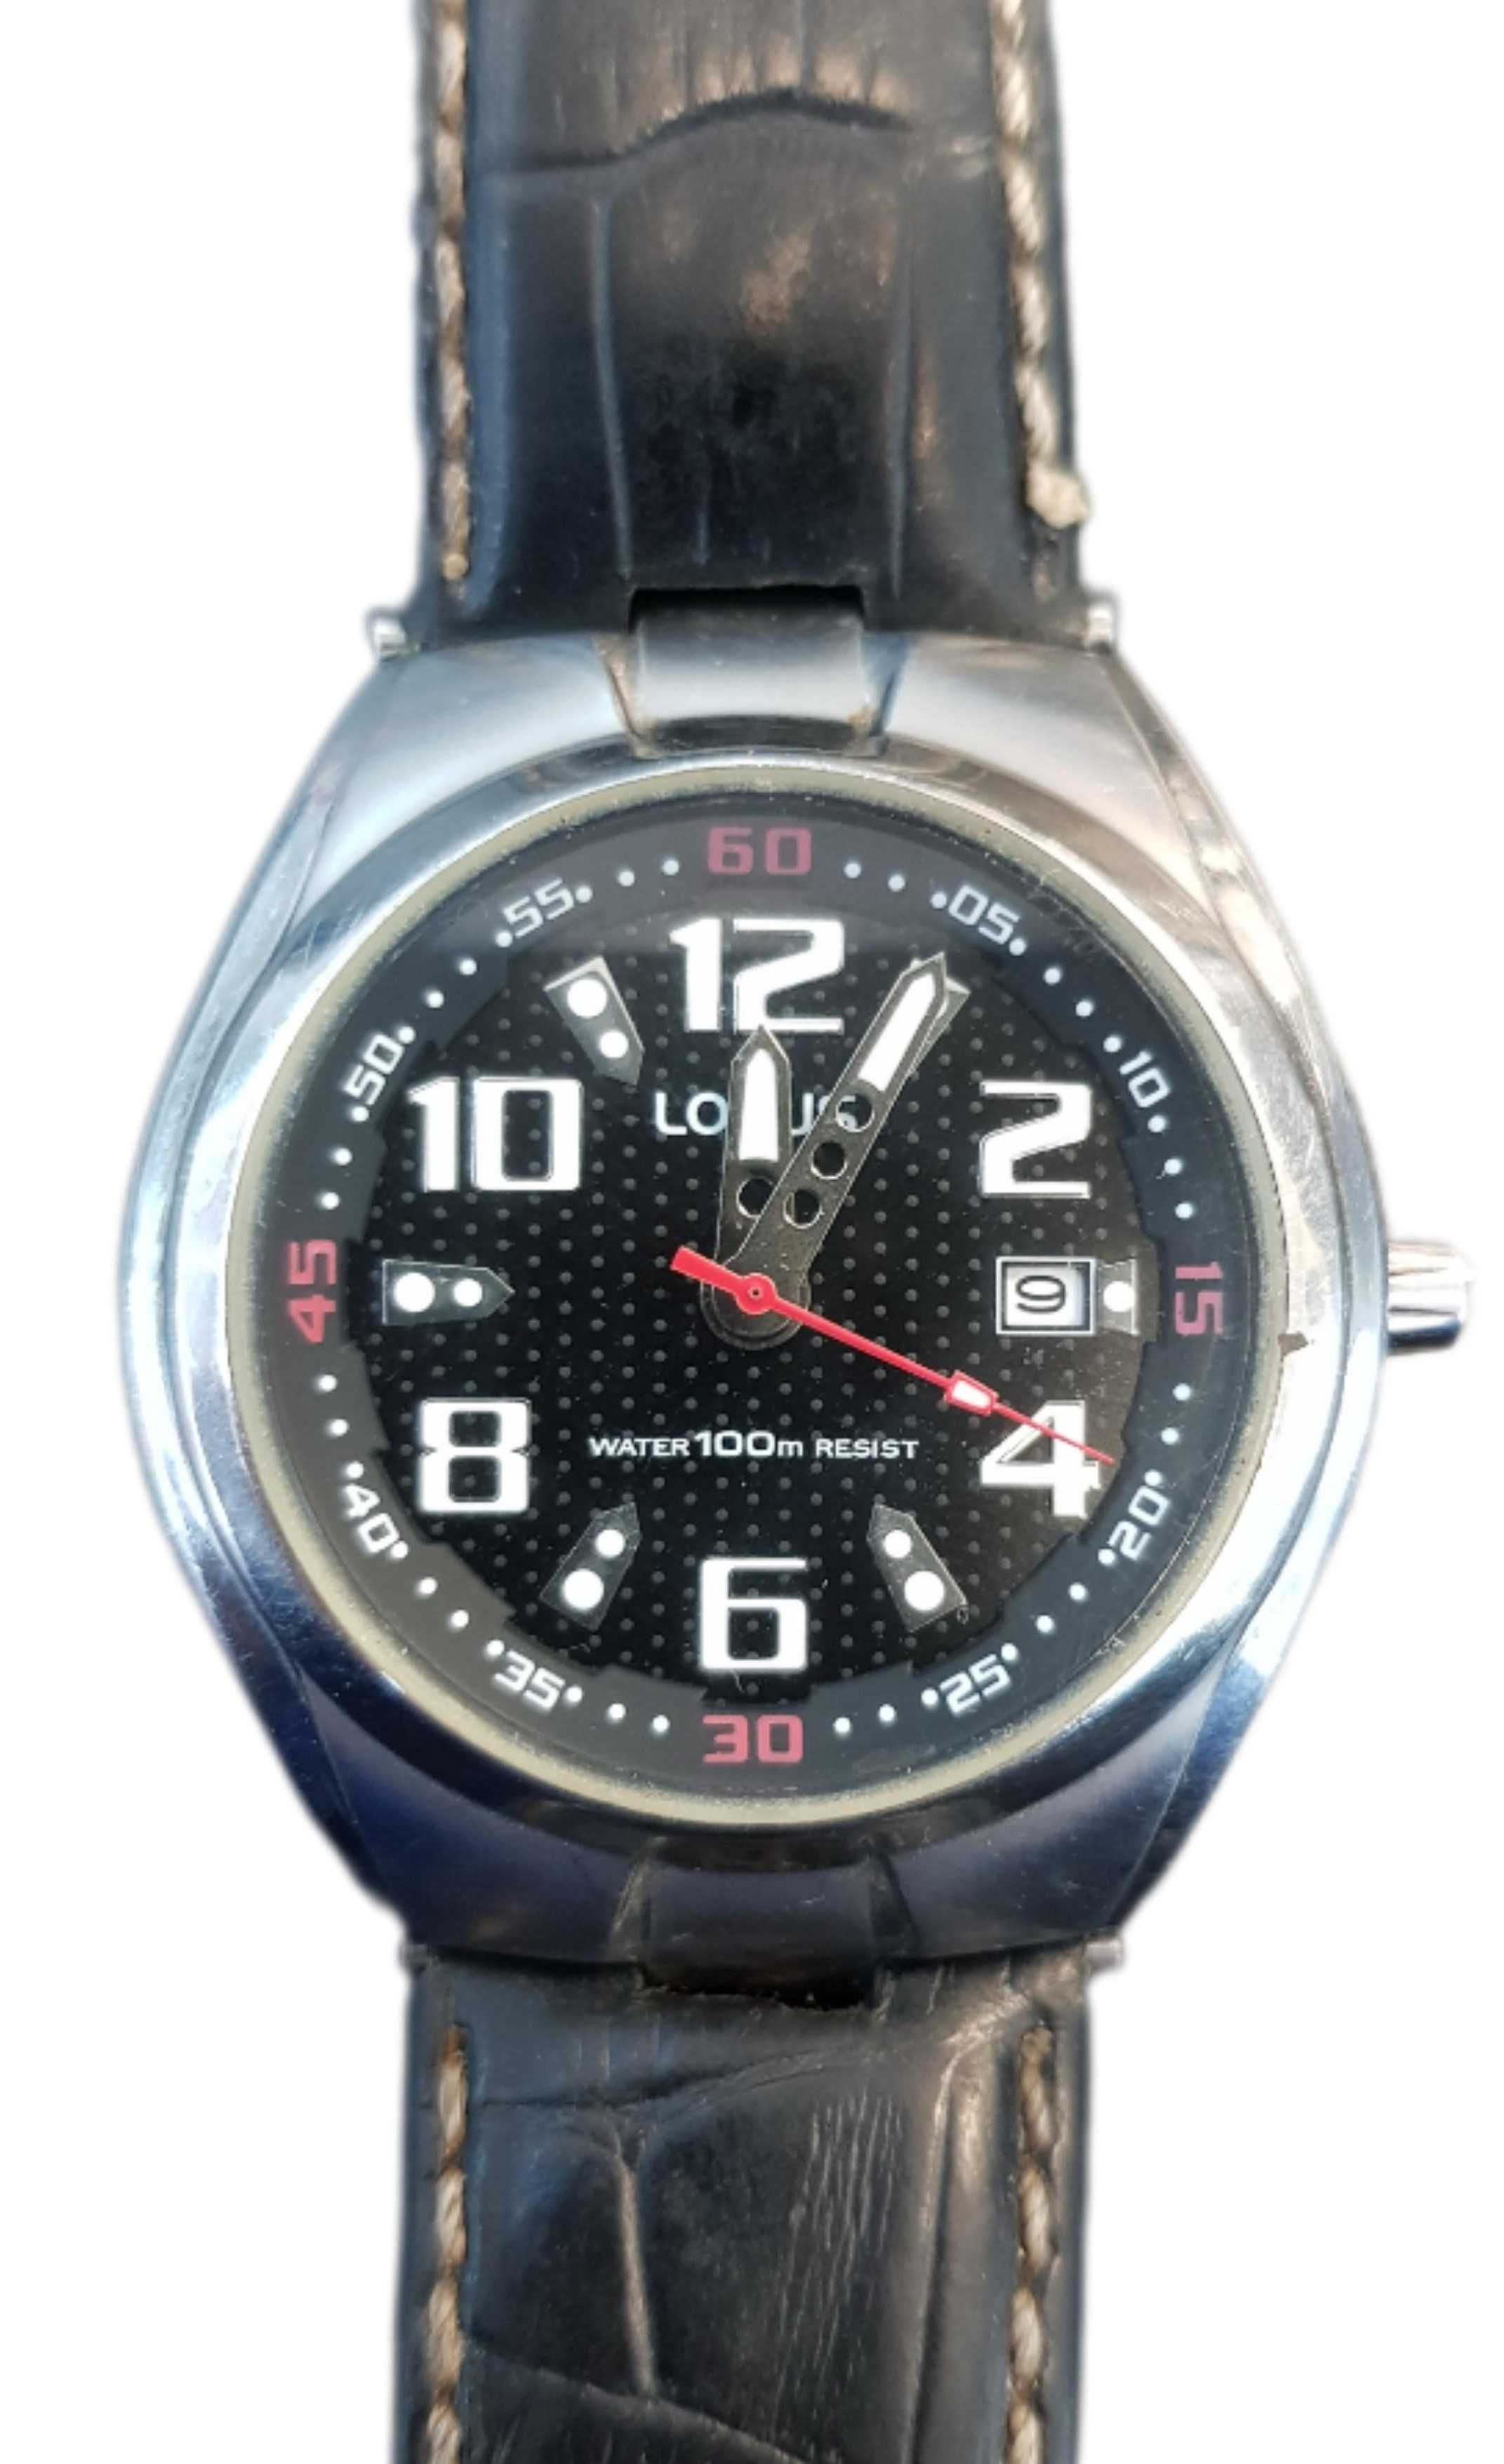 Zegarek Lorus RXH81FX9 pasek do wymiany / Nowy Lombard / TG